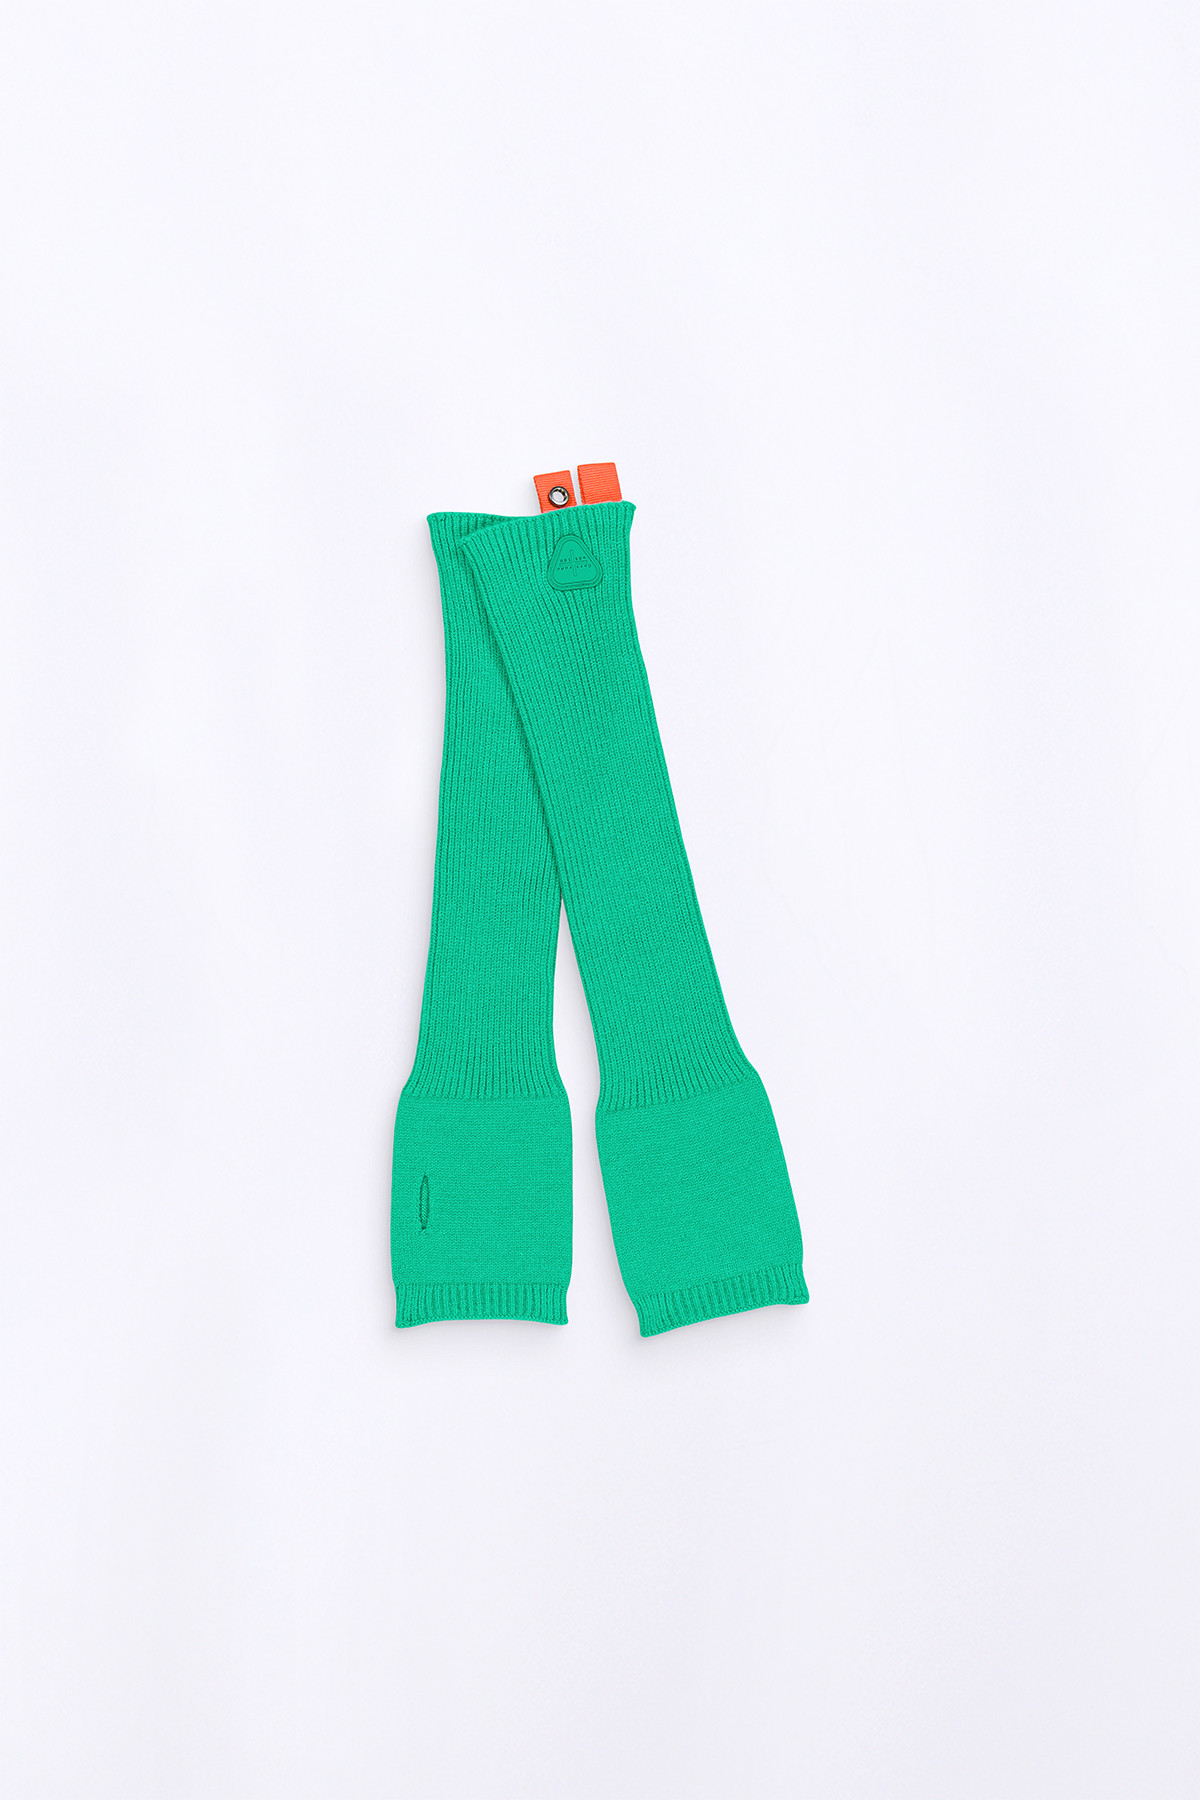 Lush Green Kitty Long Knit...